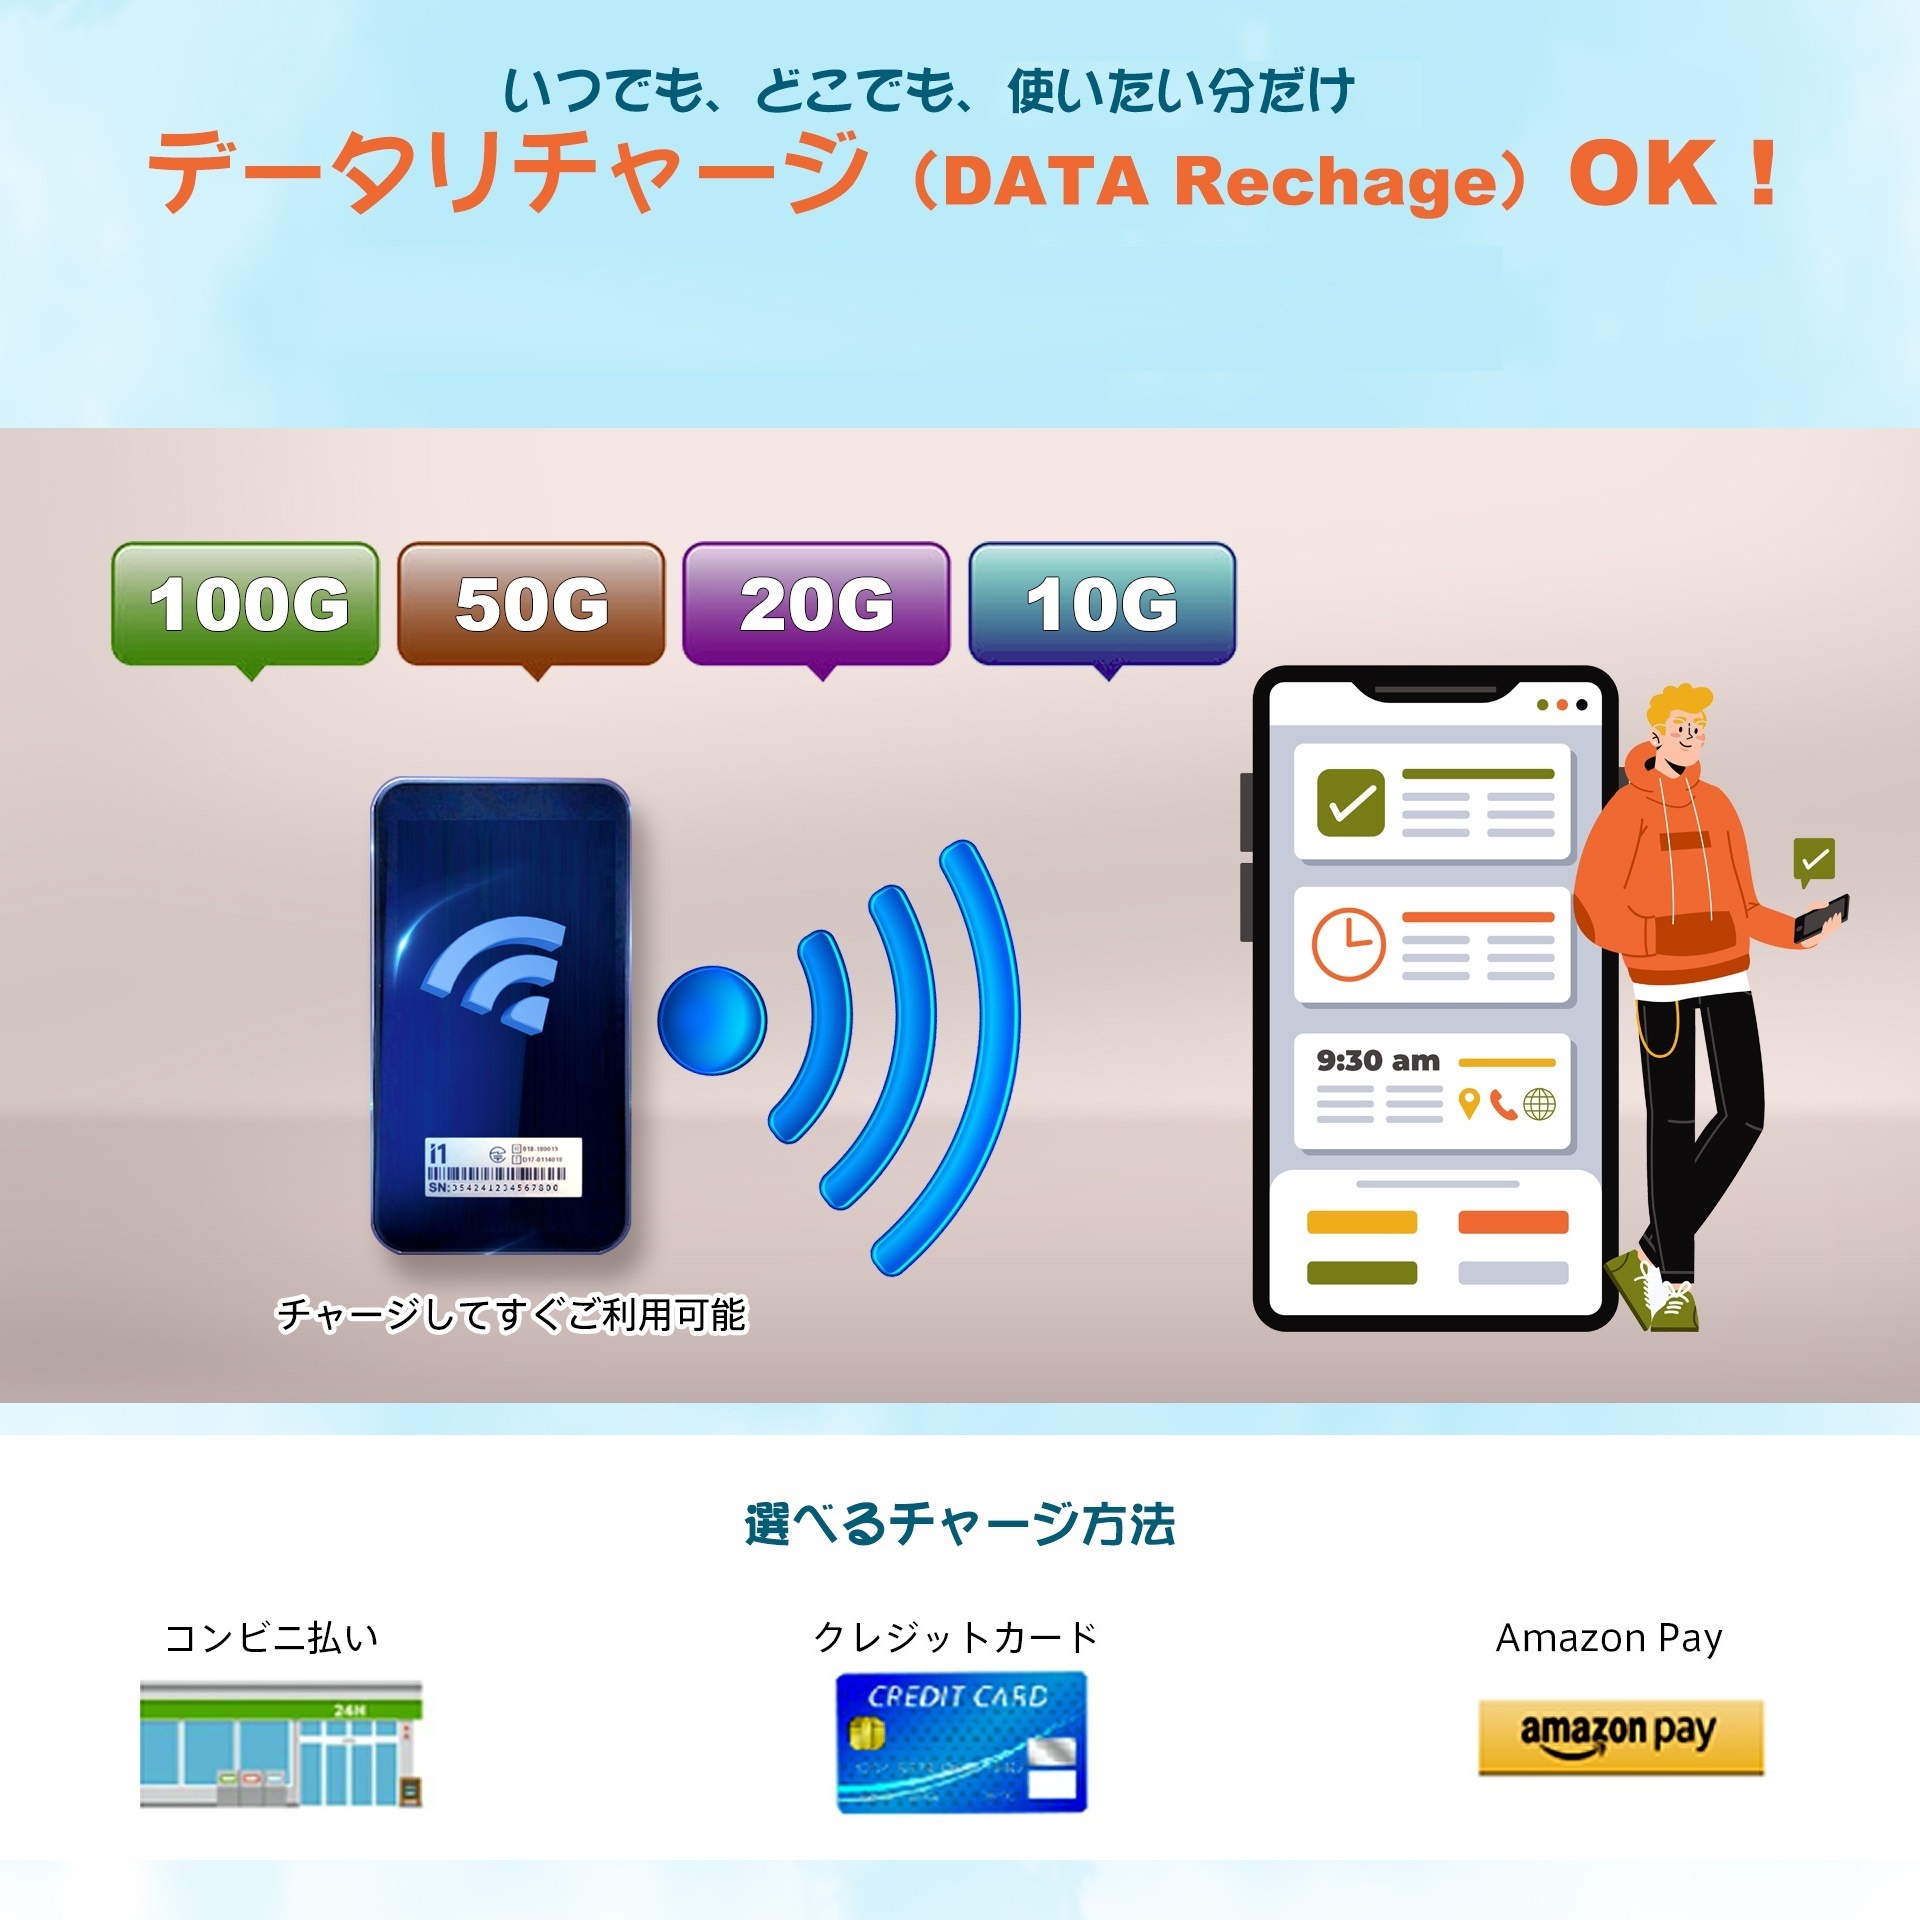 NUU konnect i1 +50GB/365日有効日本国内データ付き--U Global pocket